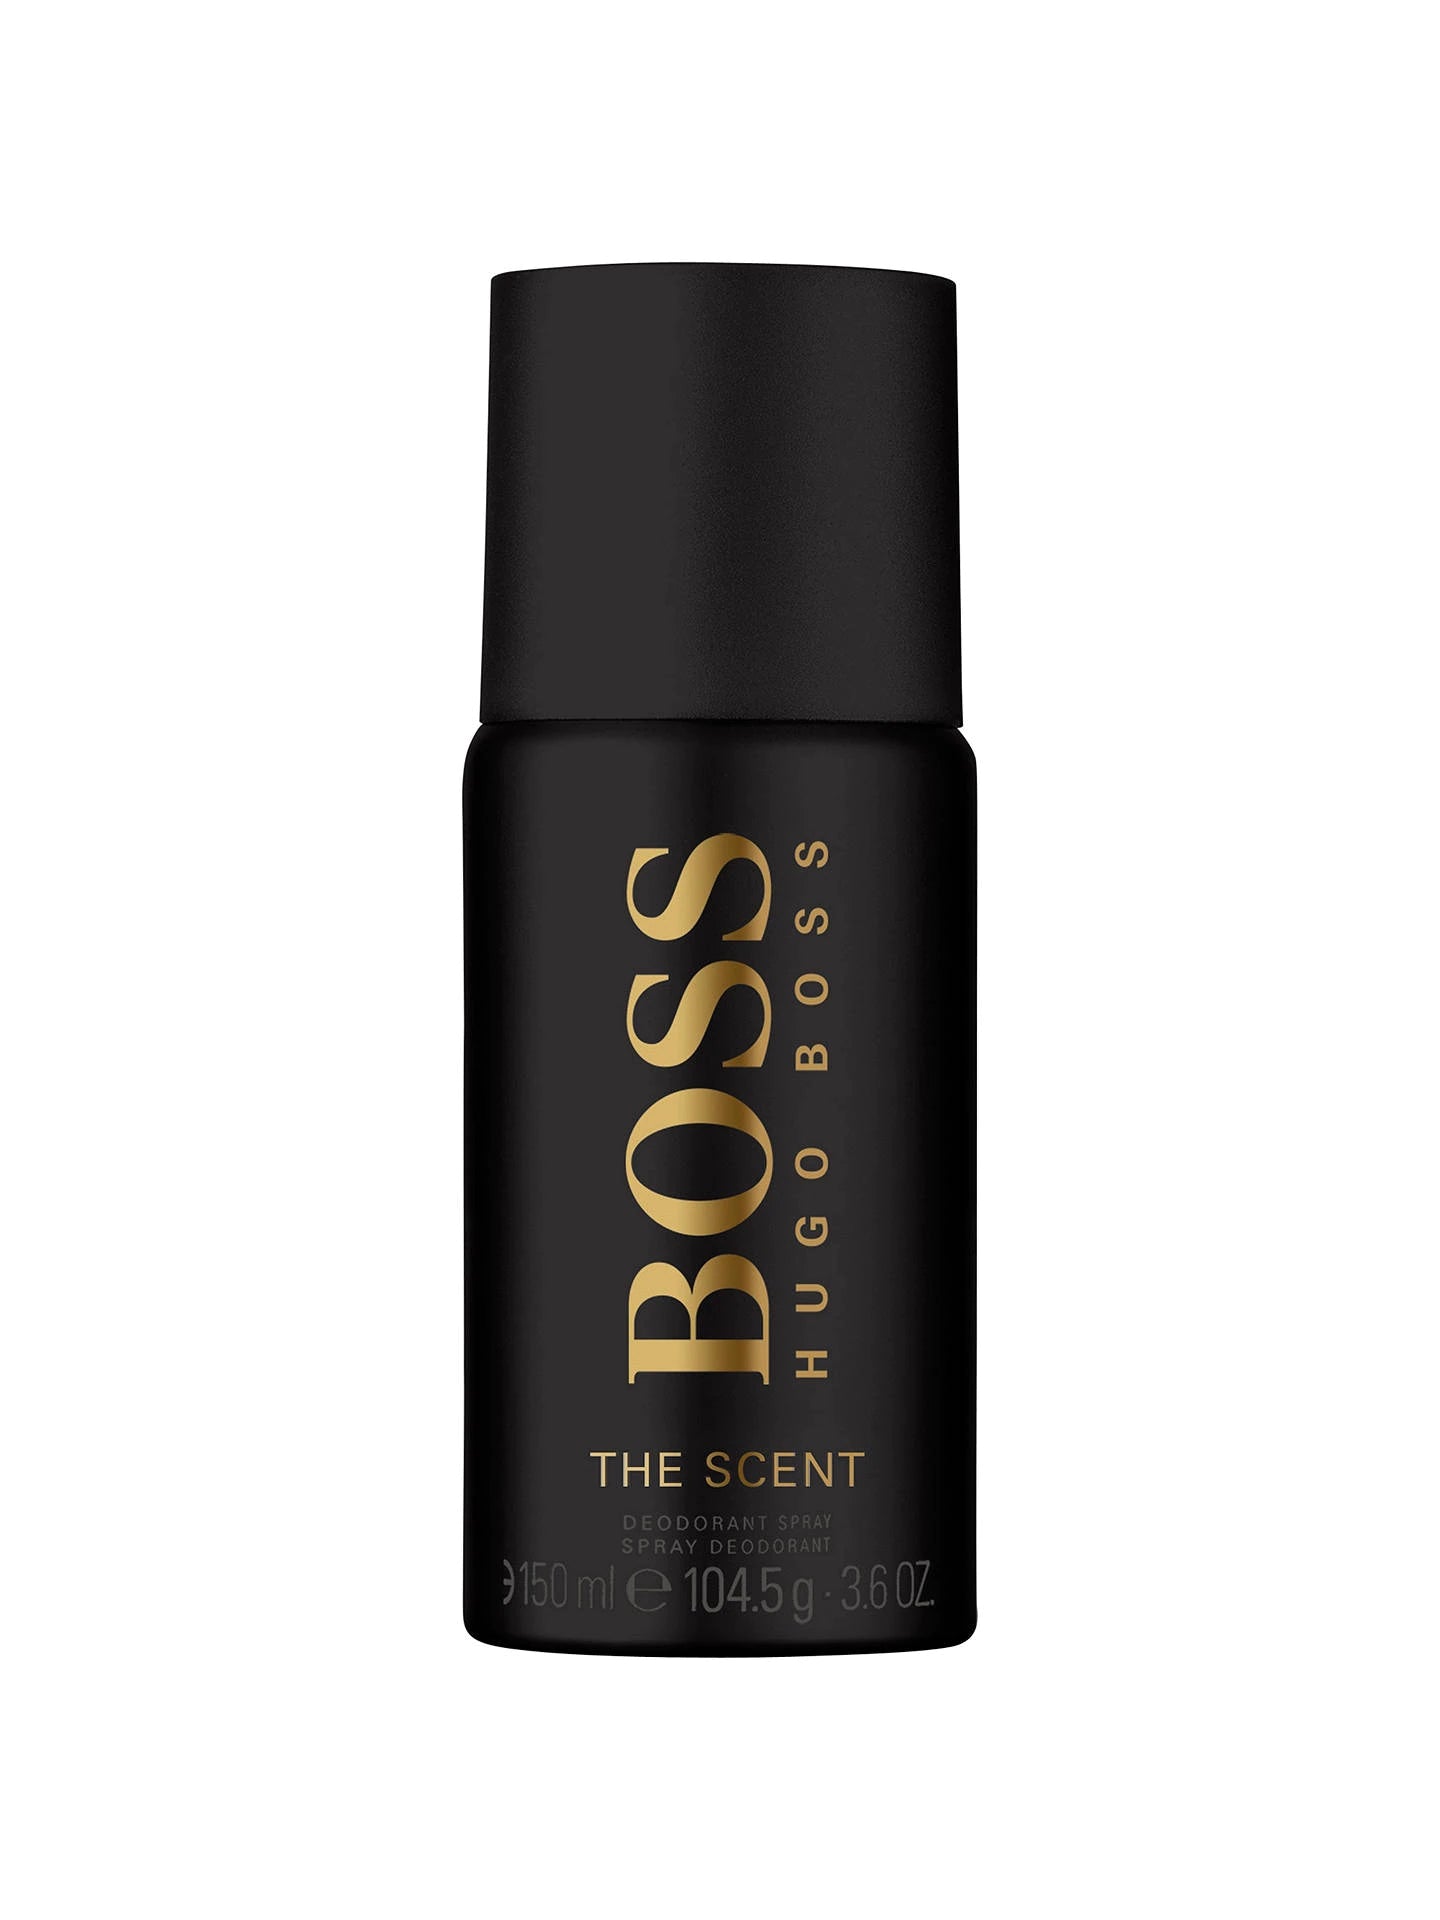 Hugo Boss Boss The Scent Deodorant Spray (150ml / 104.5g / 3.6oz)